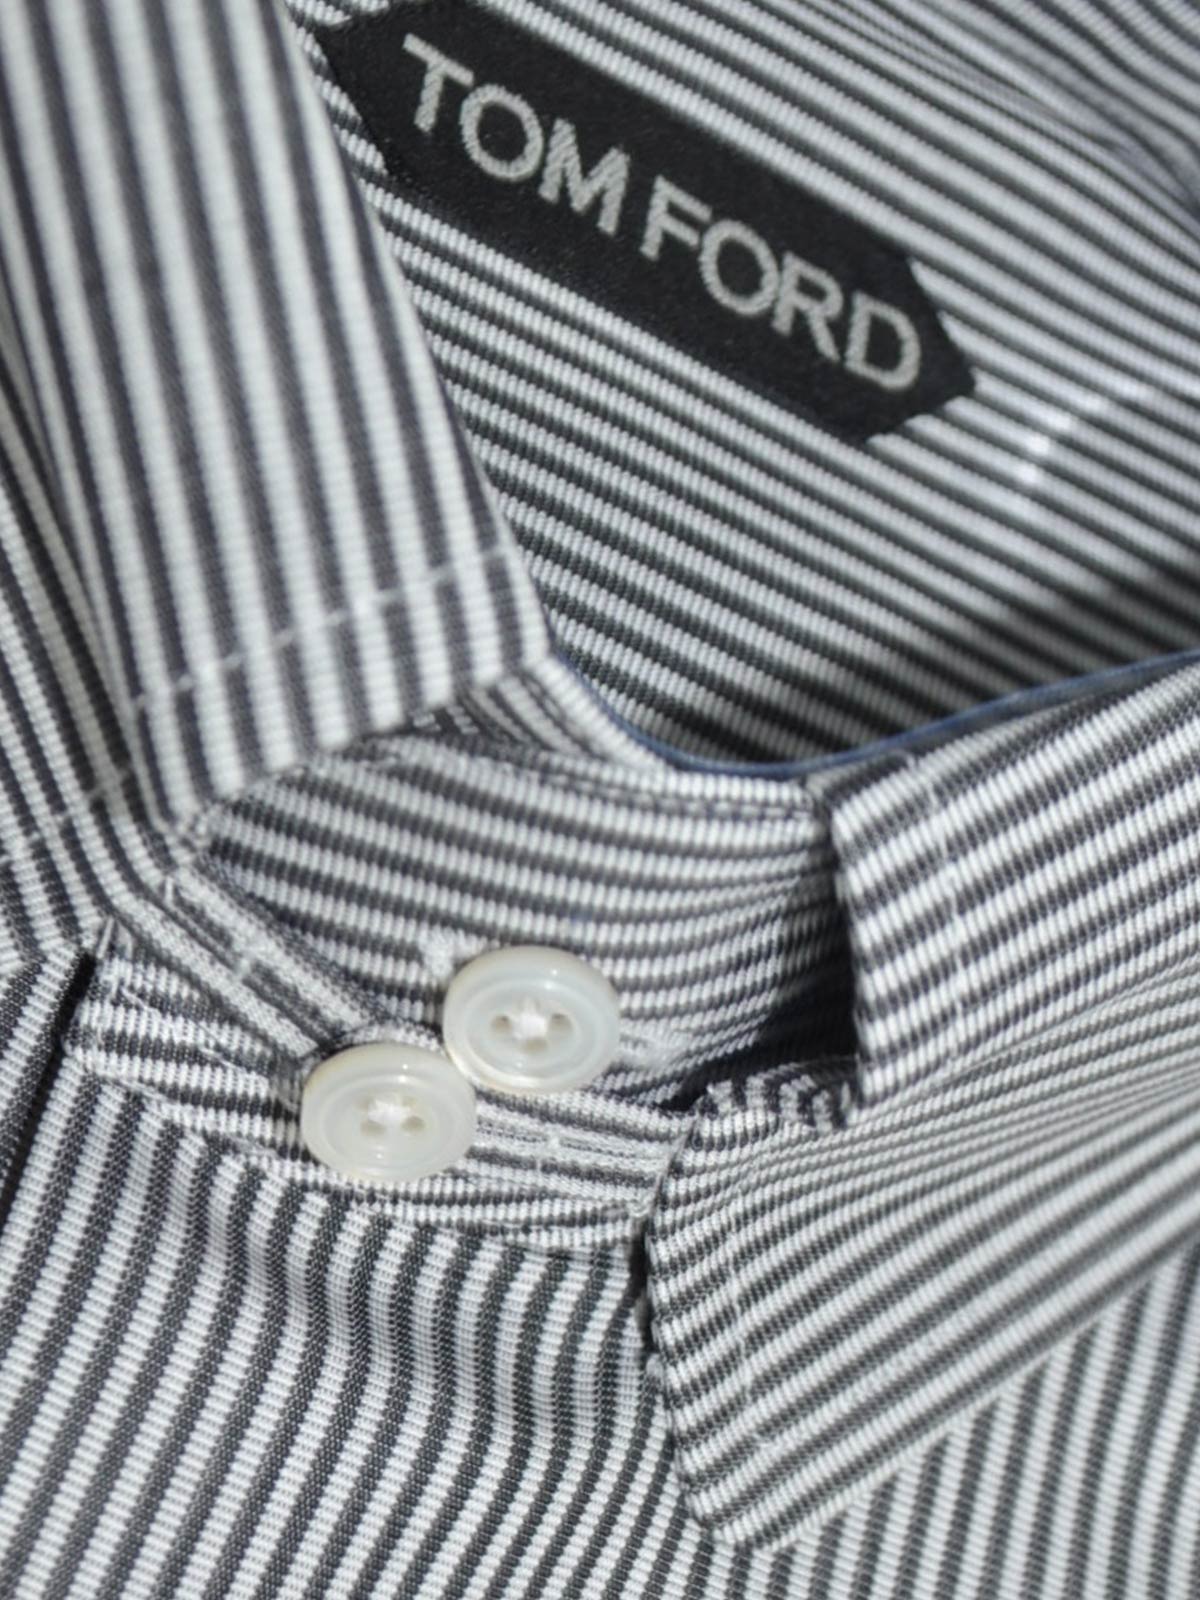 Tom Ford Dress Shirt White Black Stripes